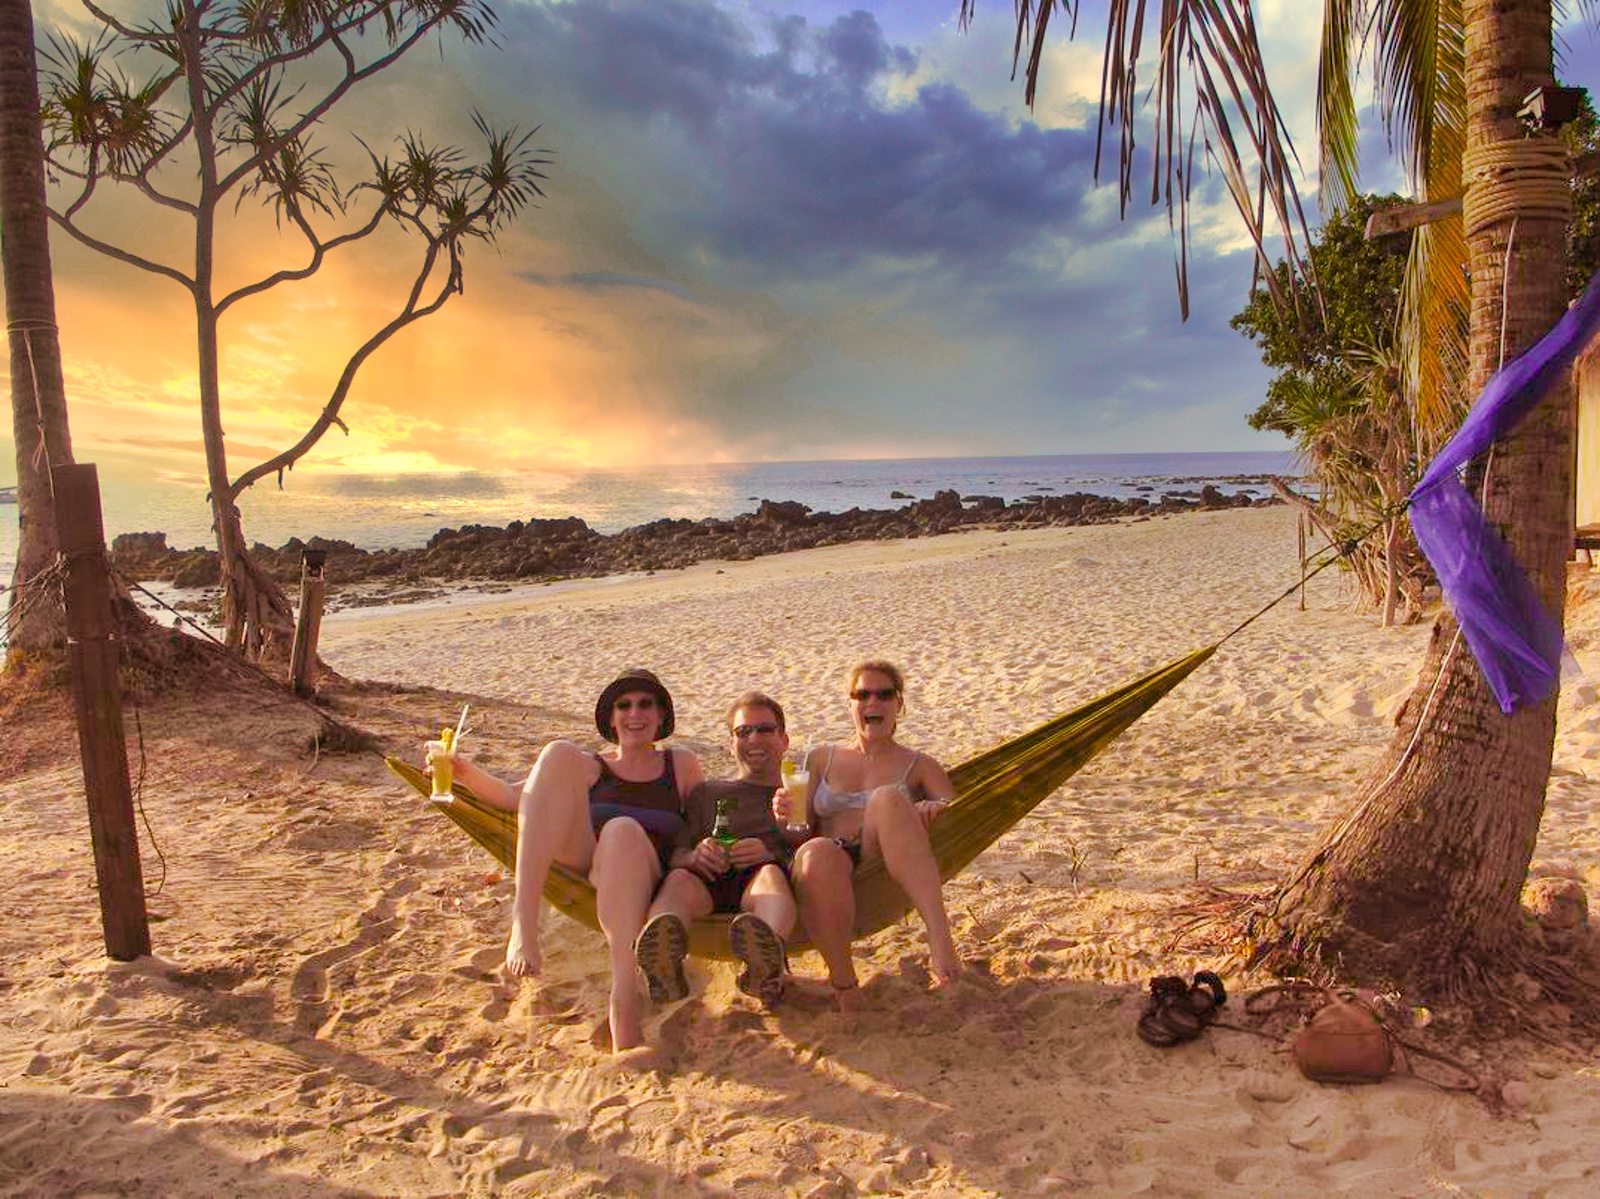 Beach hammock for three